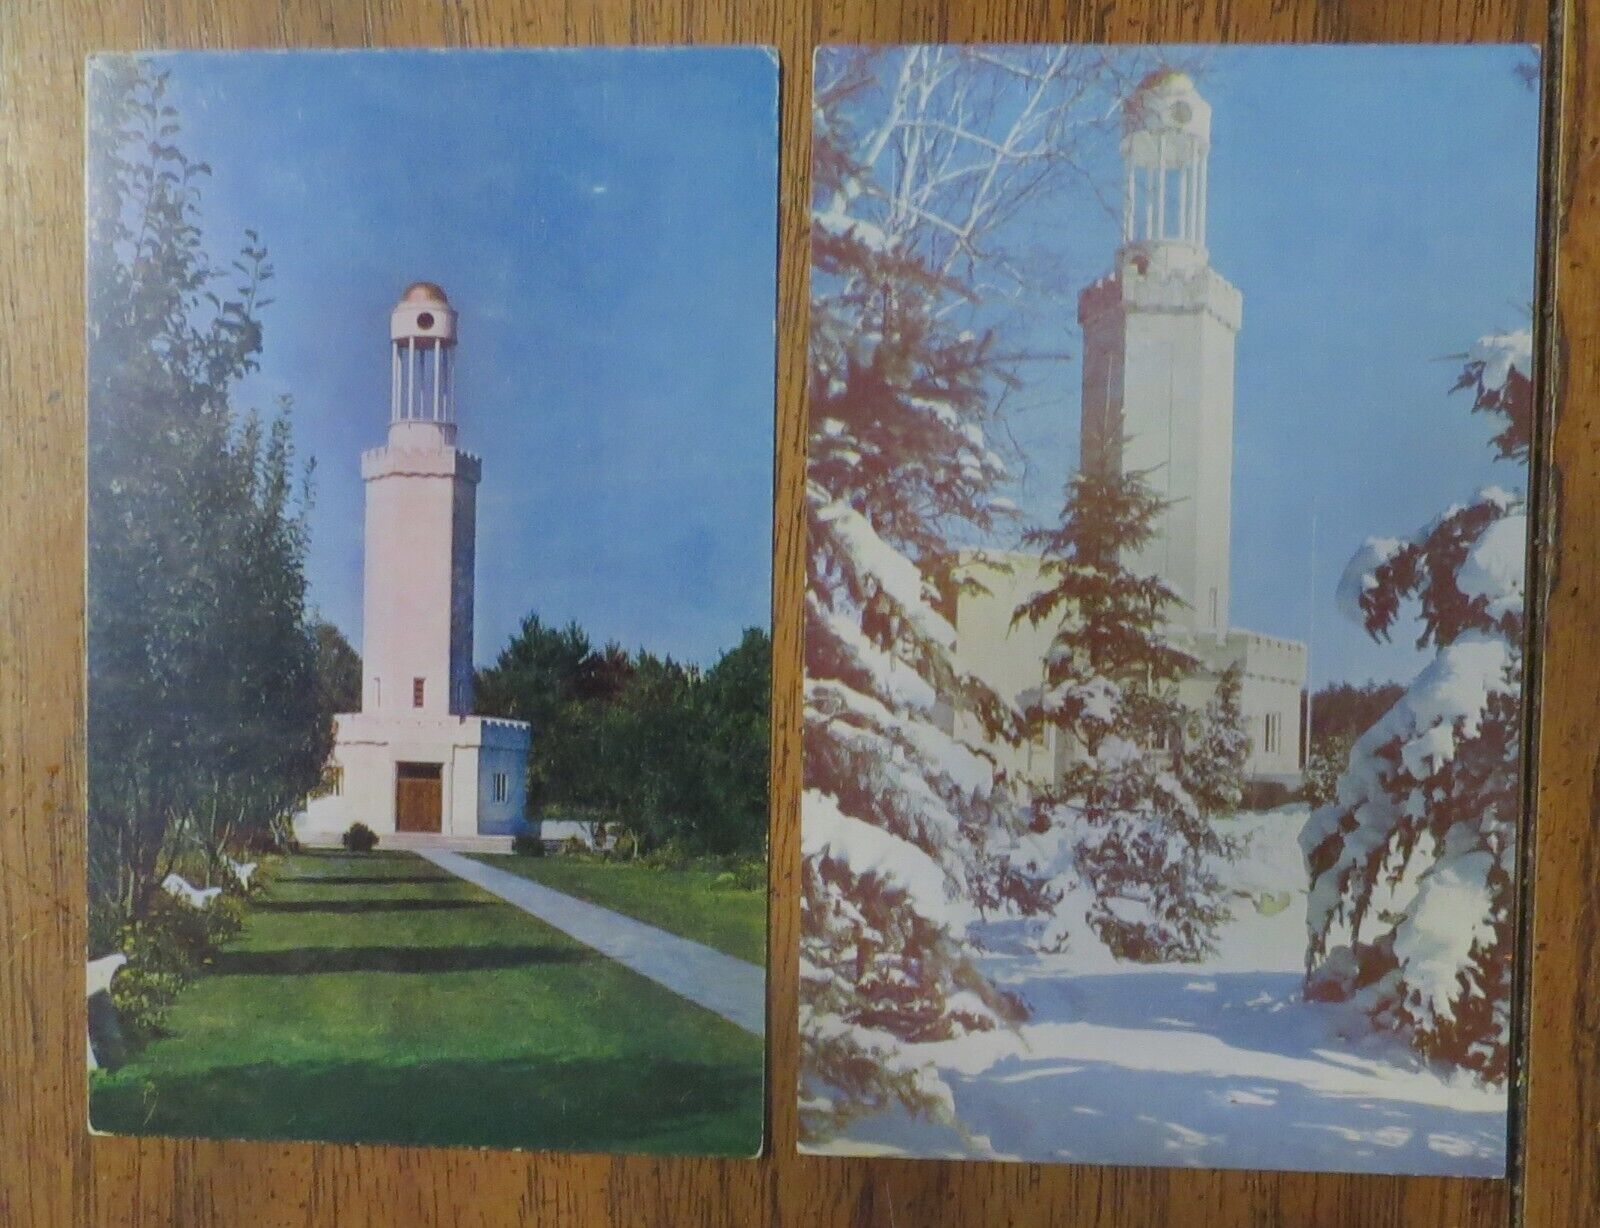 Vintage CARILLON TOWER Stanley Park Westfield Mass Summer Winter scenes unposted